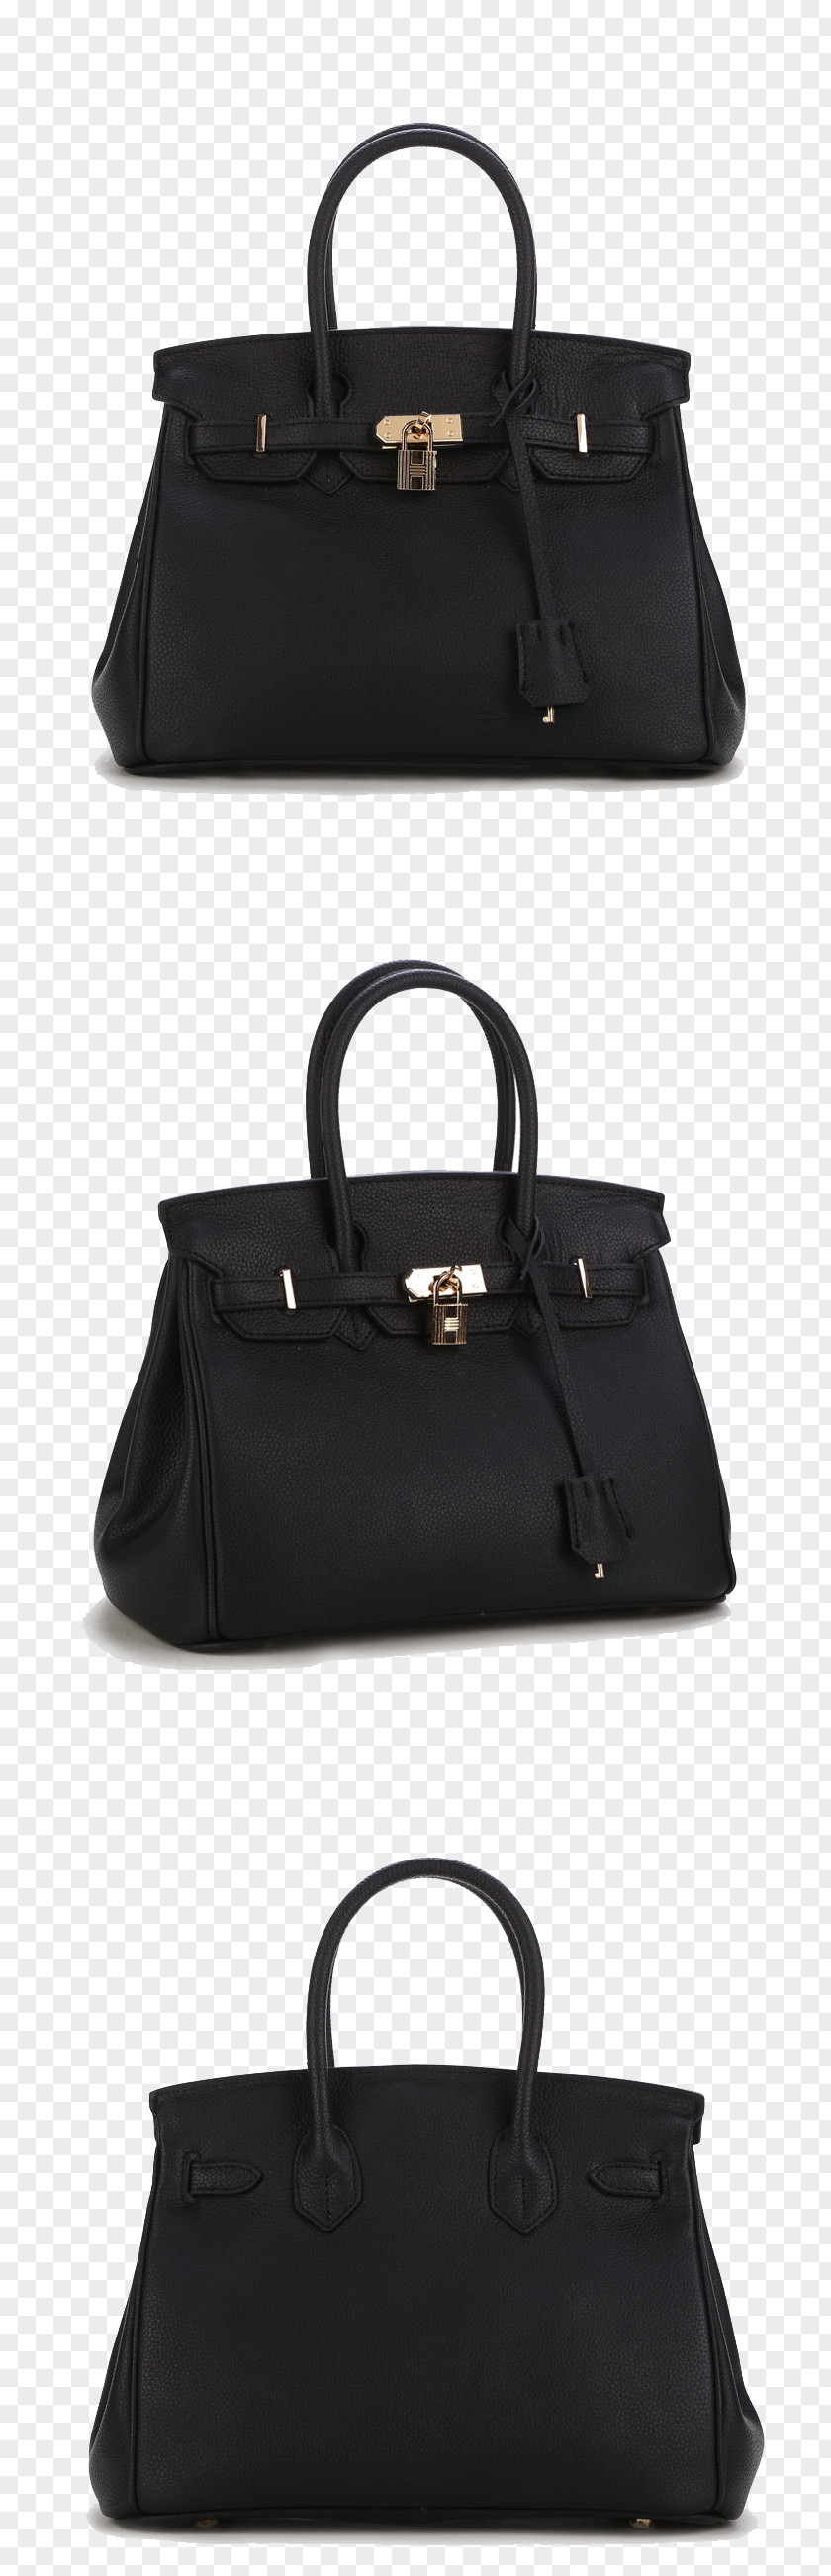 Black Lock Laptop Handbags Keychain Handbag PNG